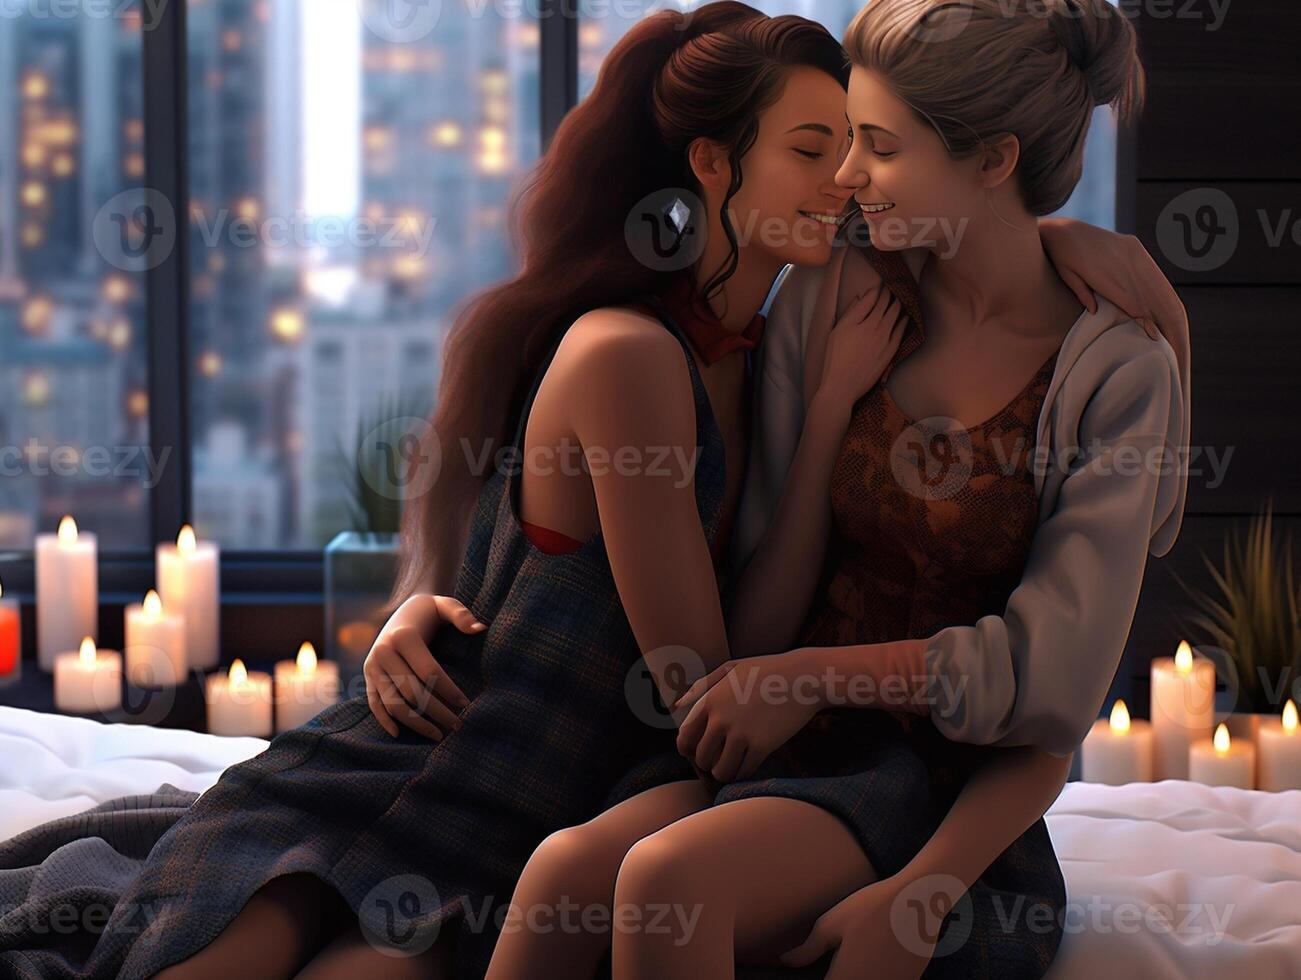 ai generatief lesbienne paar zoenen Aan de bed homo Dames samen binnen- foto